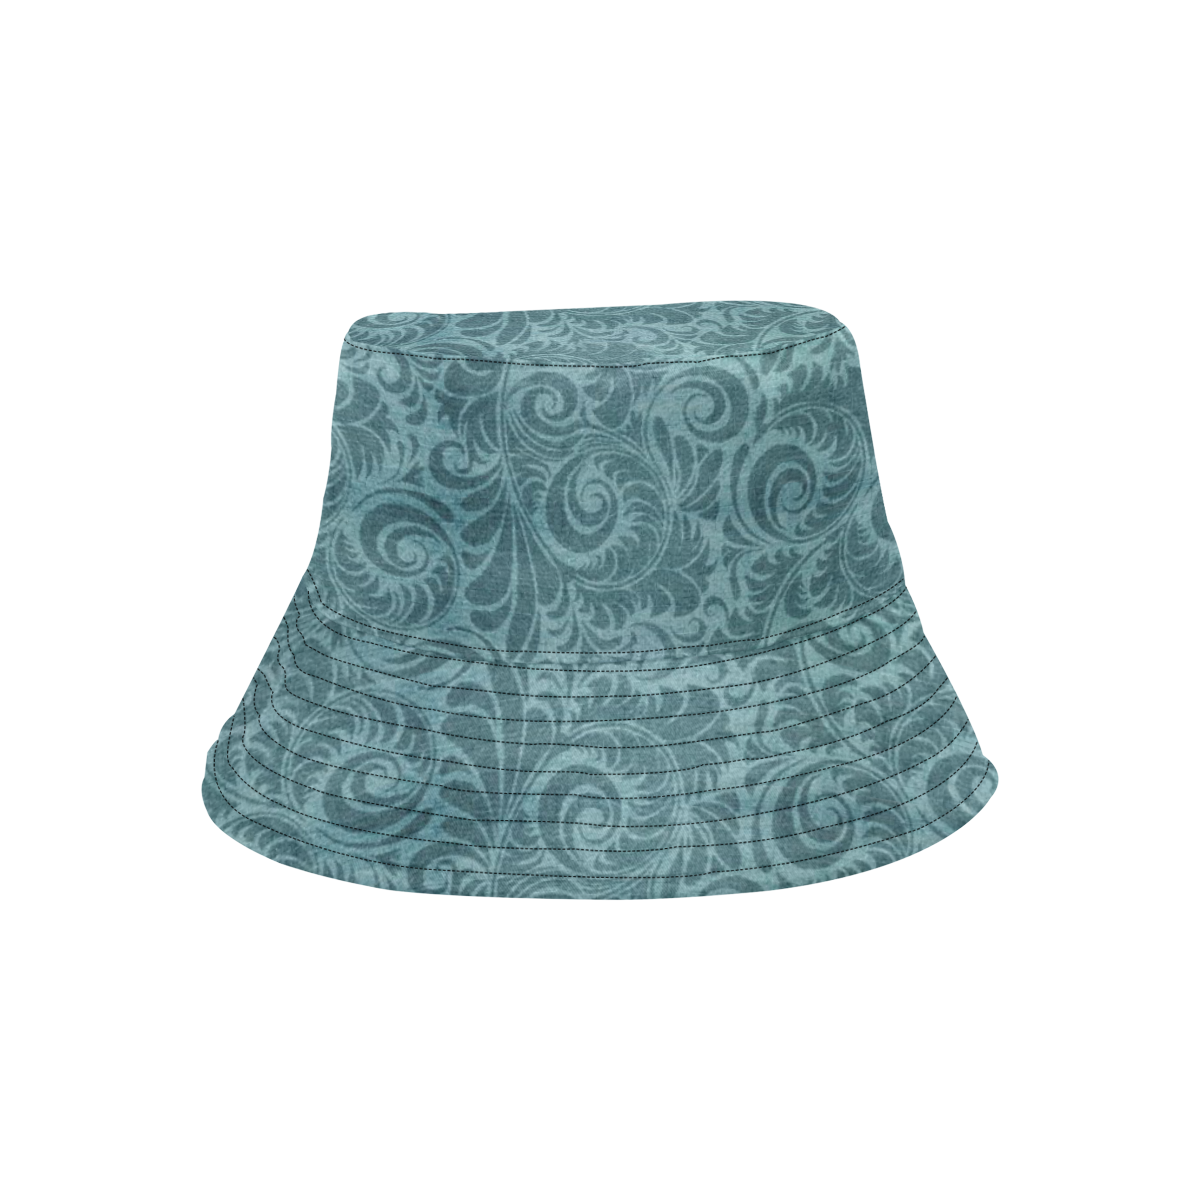 Denim with vintage floral pattern, turquoise teal All Over Print Bucket Hat for Men